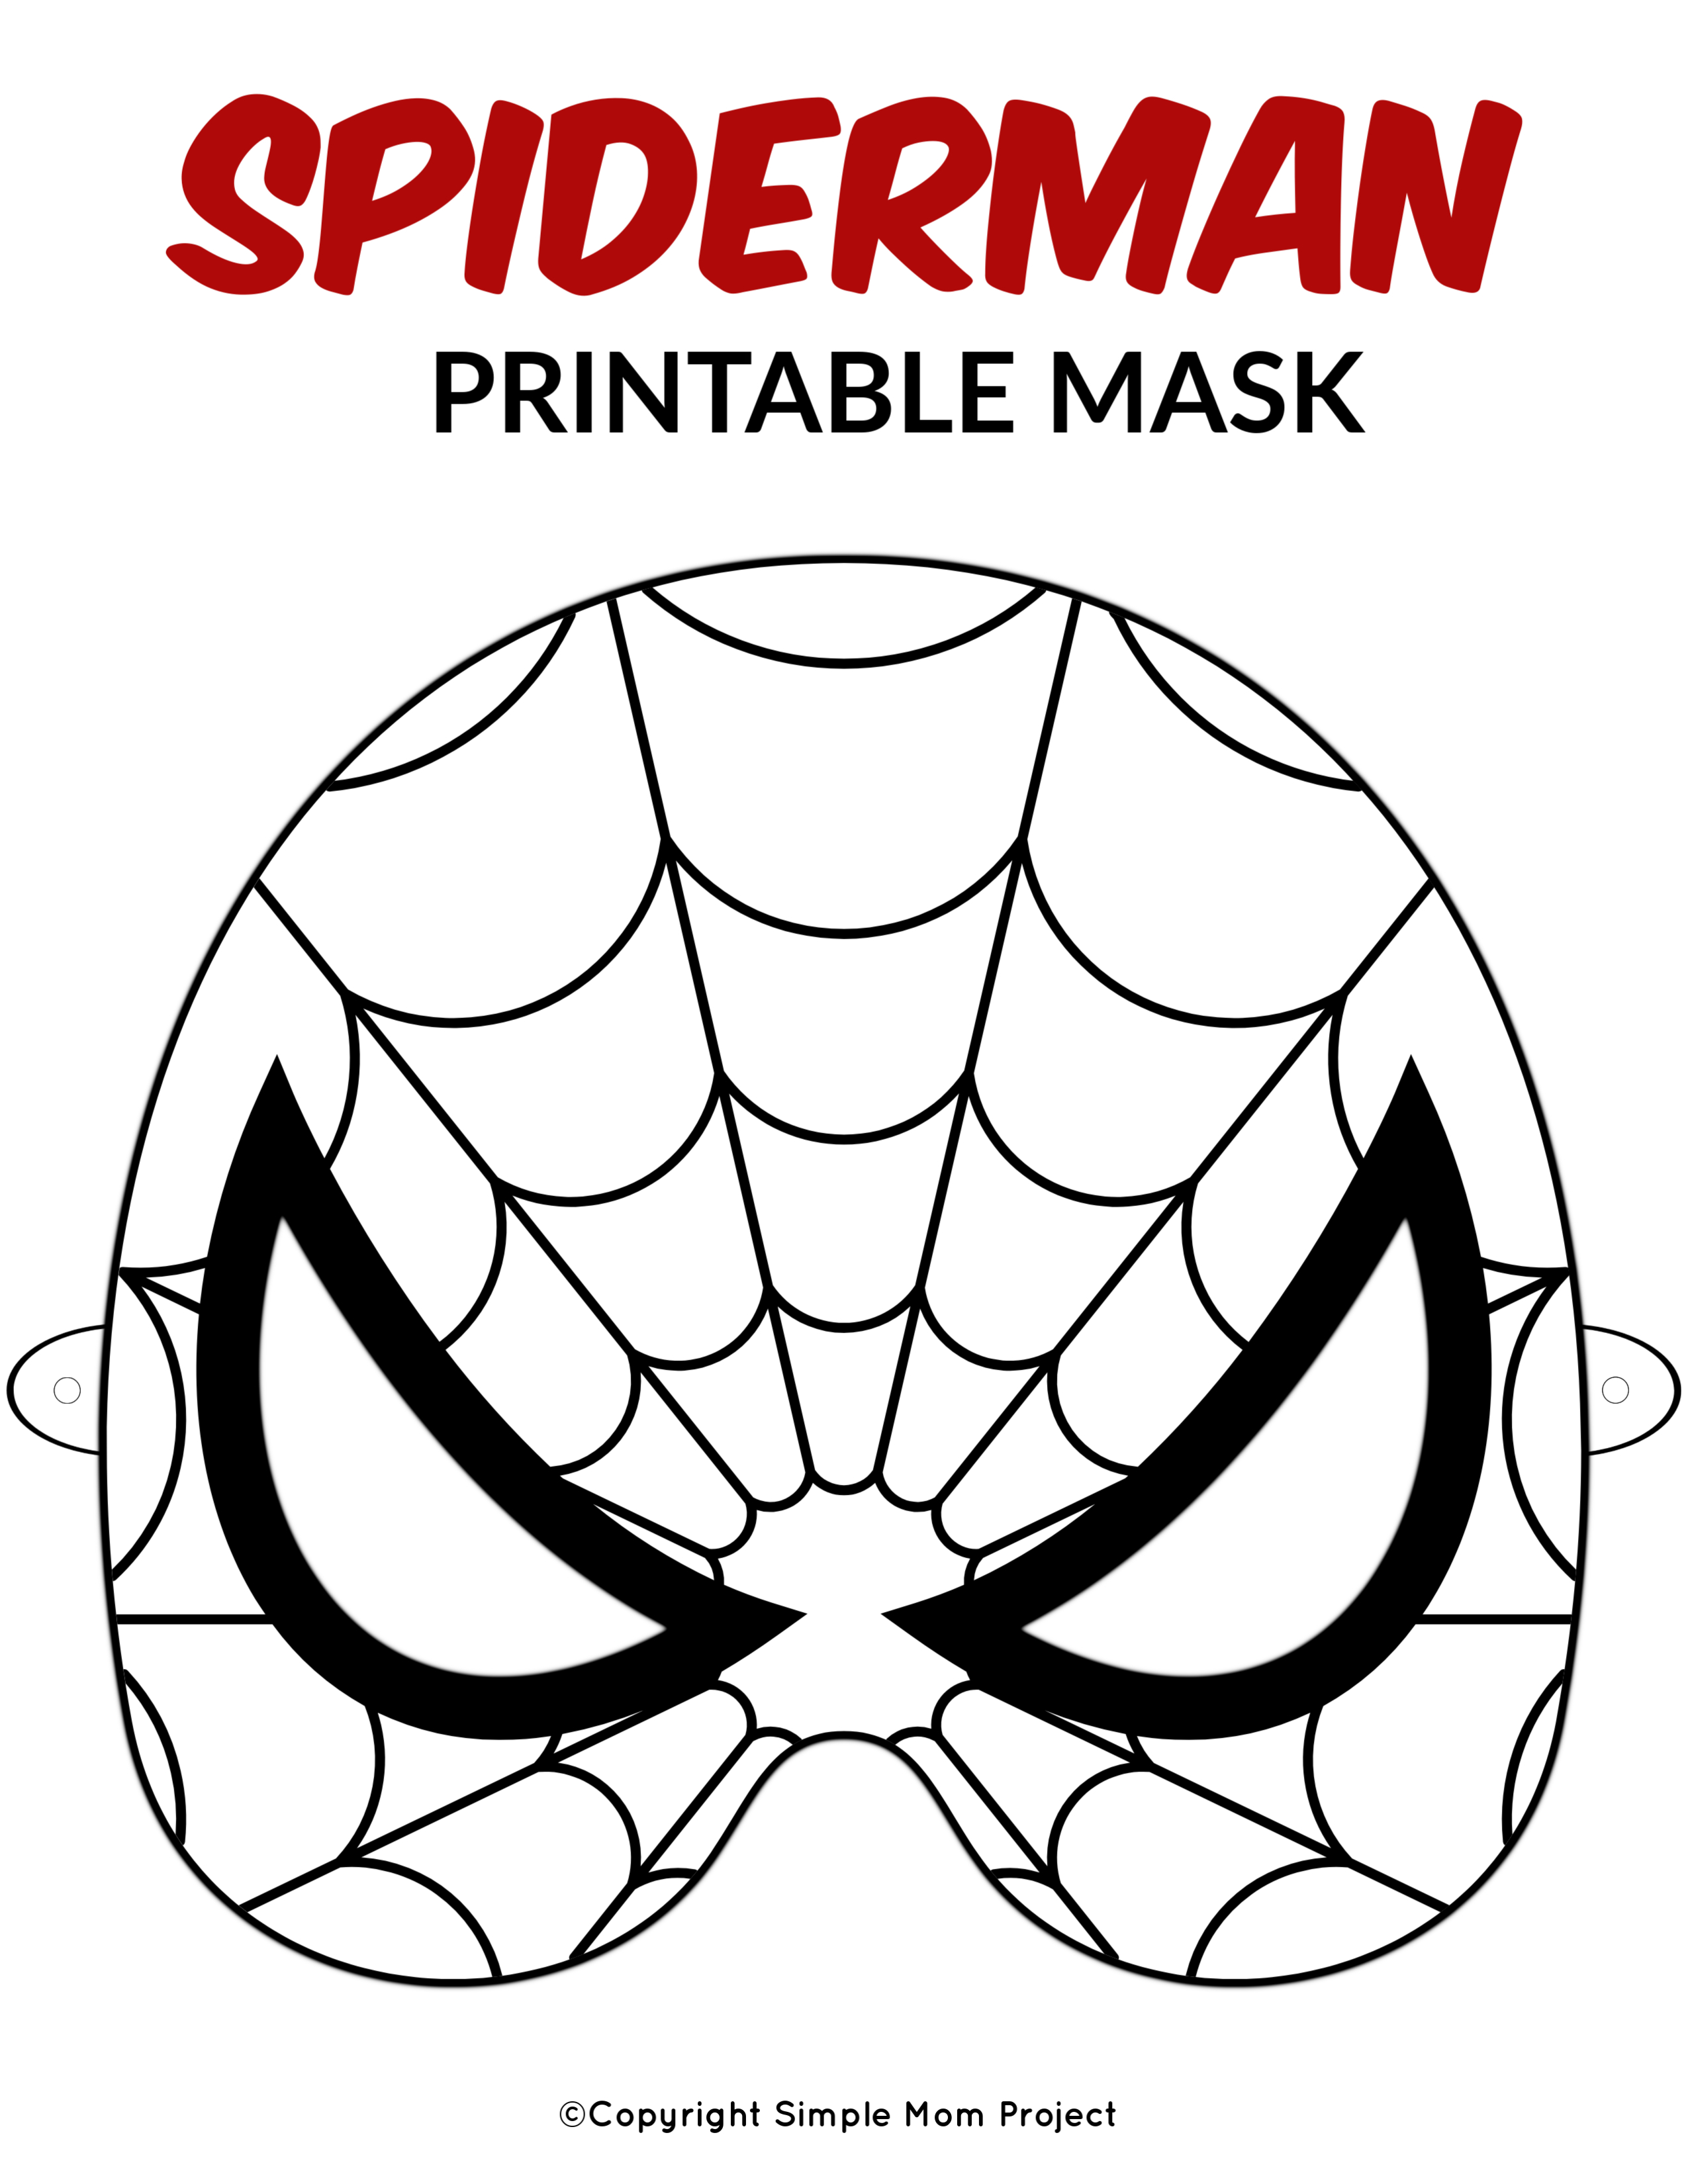 Free Printable Superhero Face Masks For Kids - Simple Mom Project - Free Printable Masks